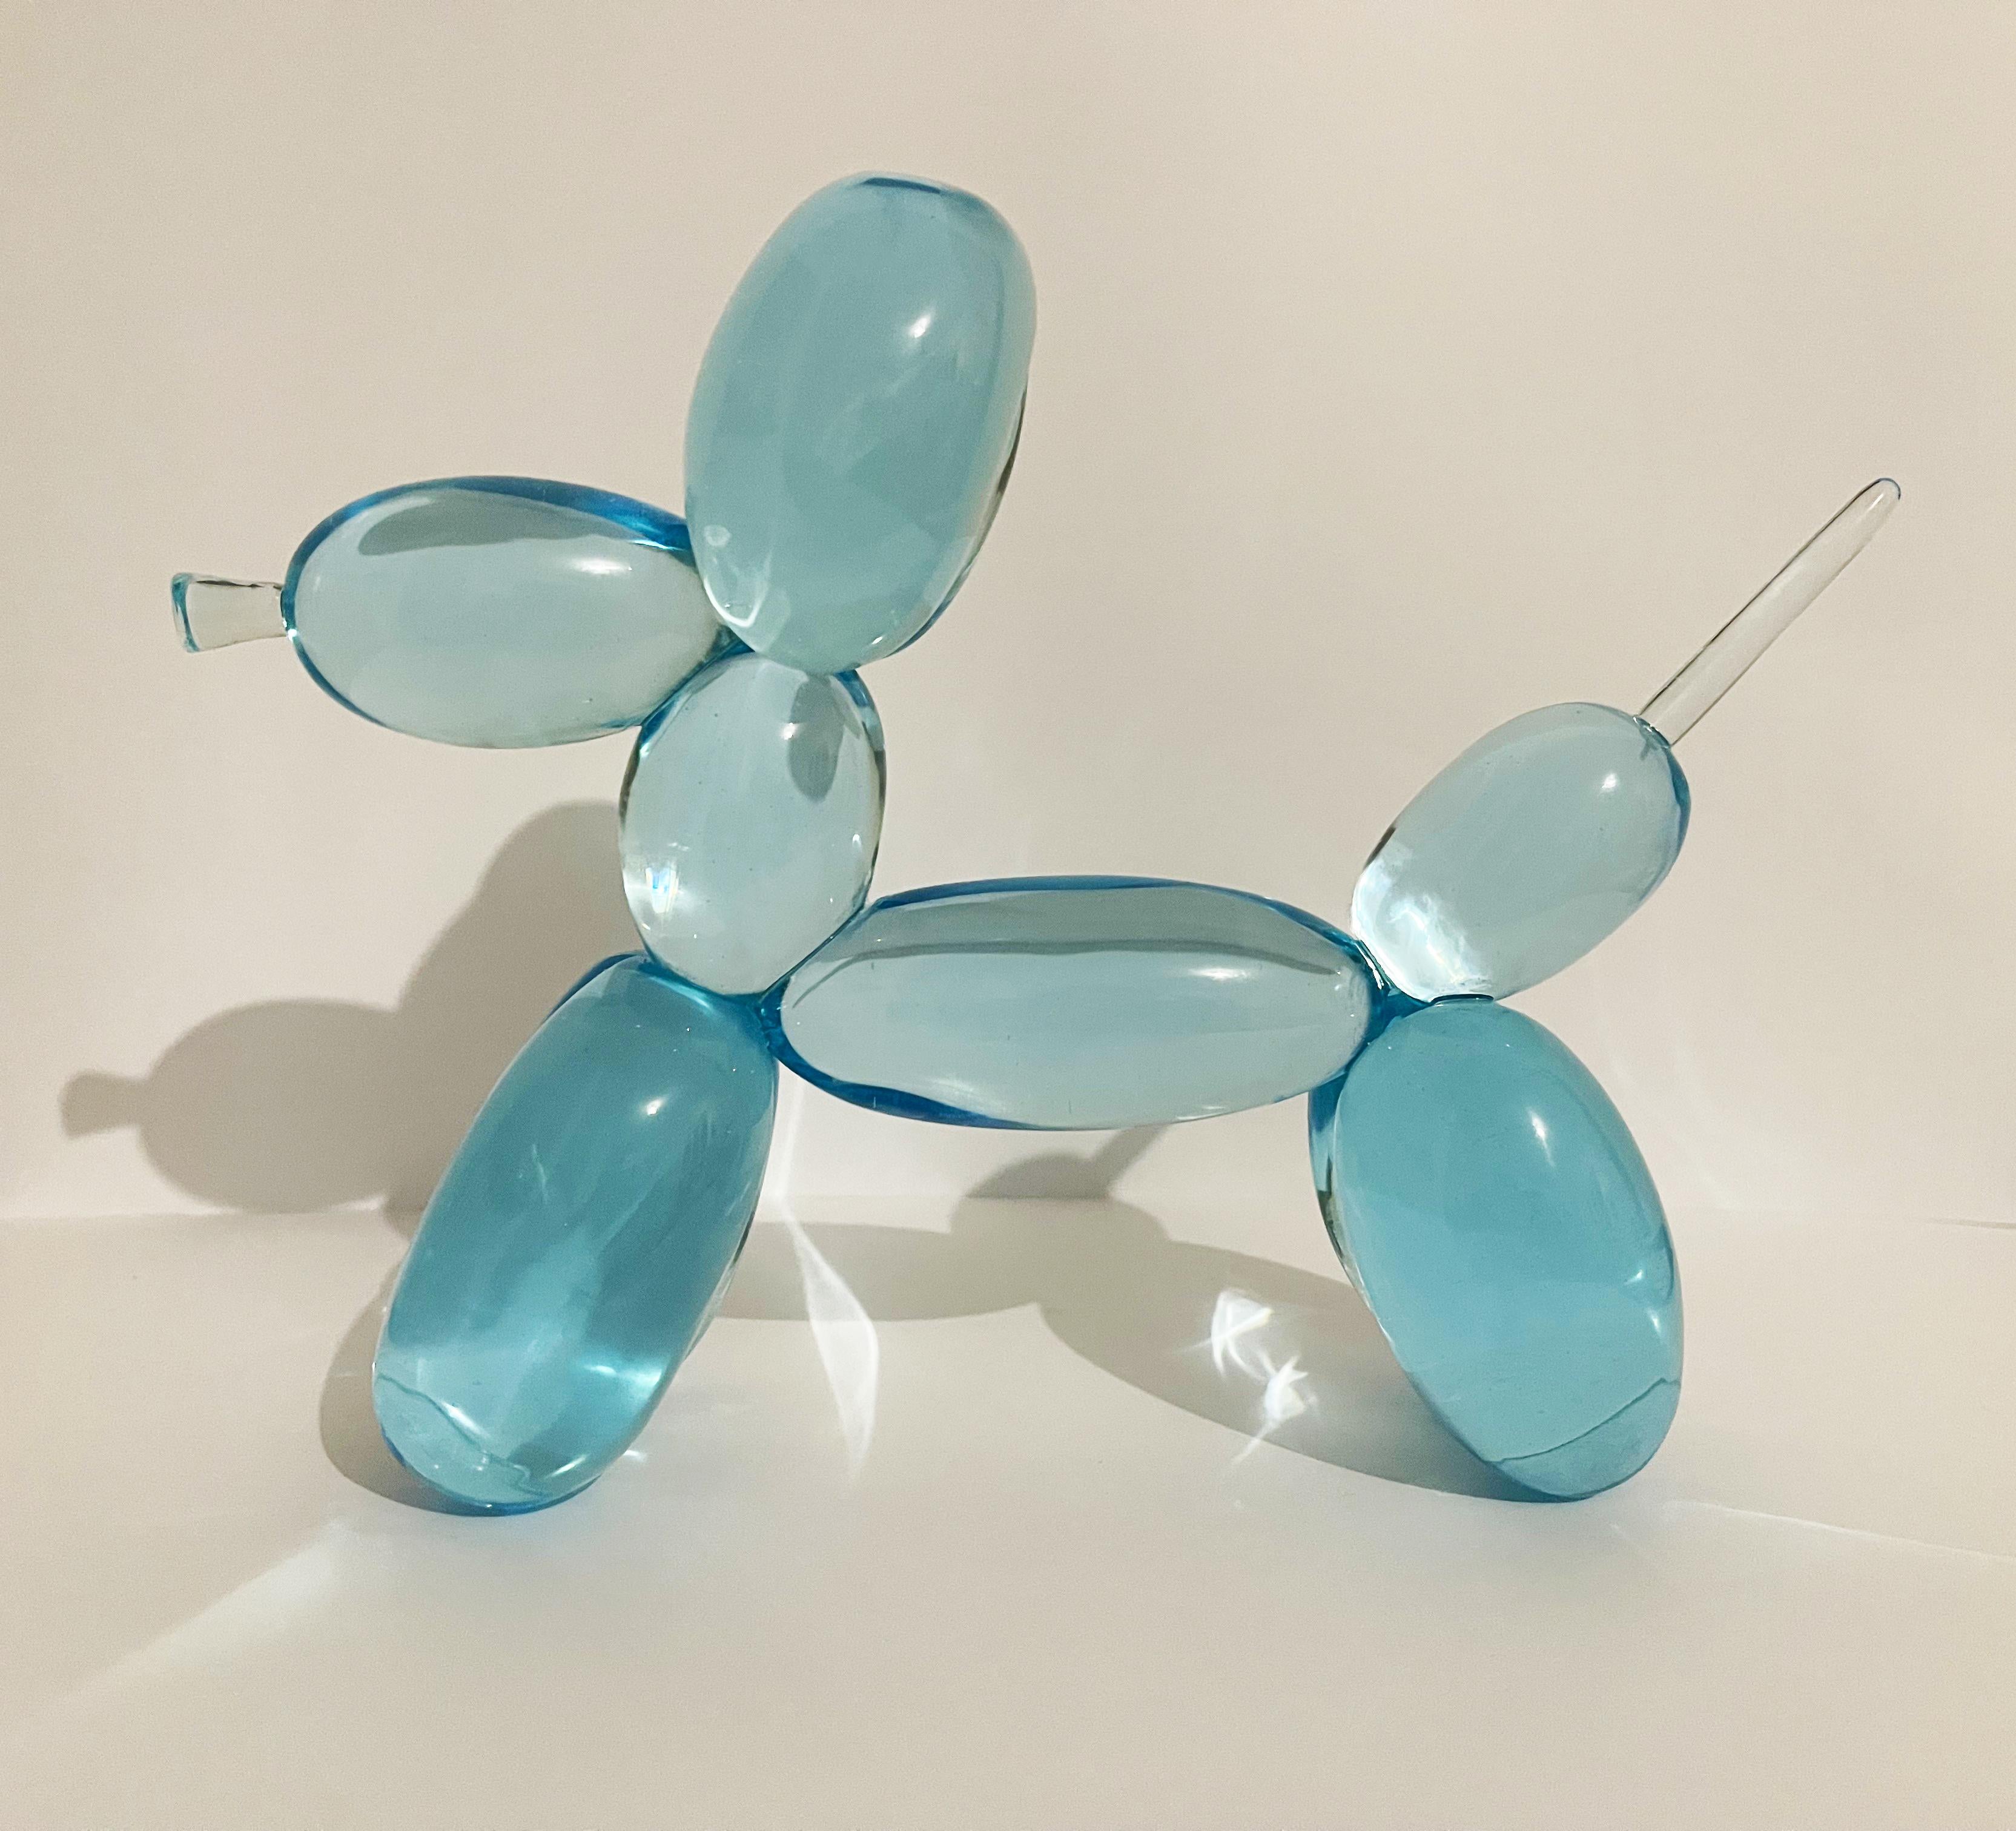 Modern Contemporary 'Dog' Handmade Light Blue Crystal Sculpture by Ghirò Studio